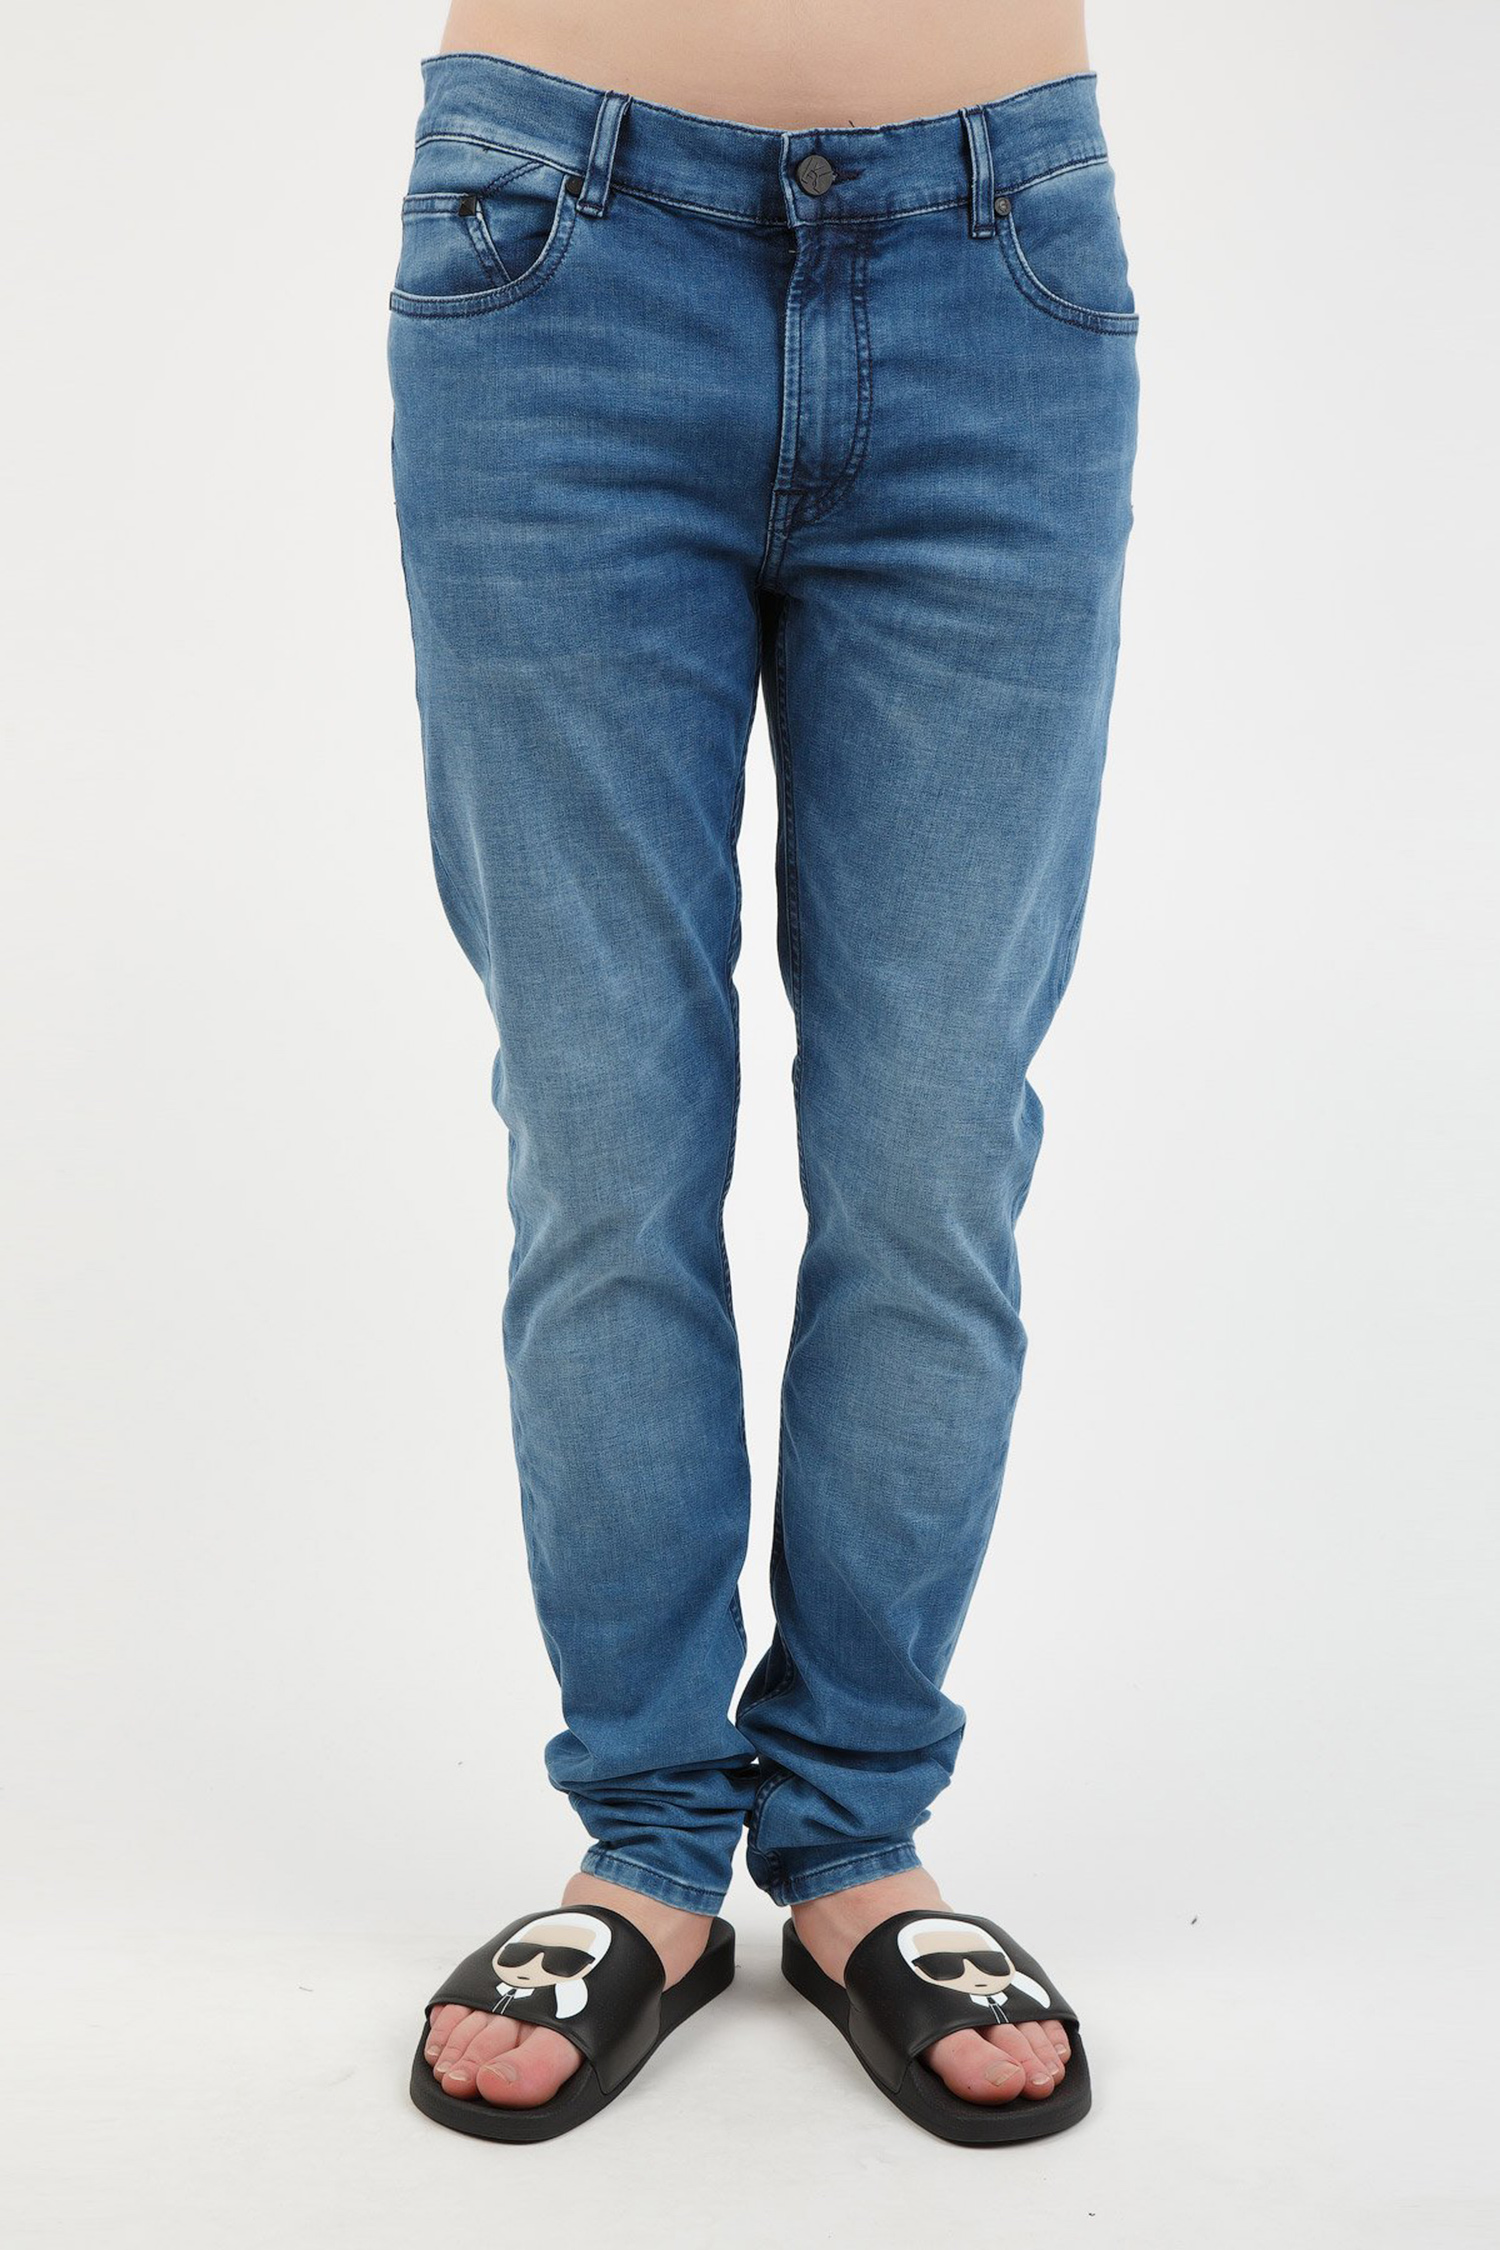 Мужские синие джинсы Karl Lagerfeld 501833.265801;620